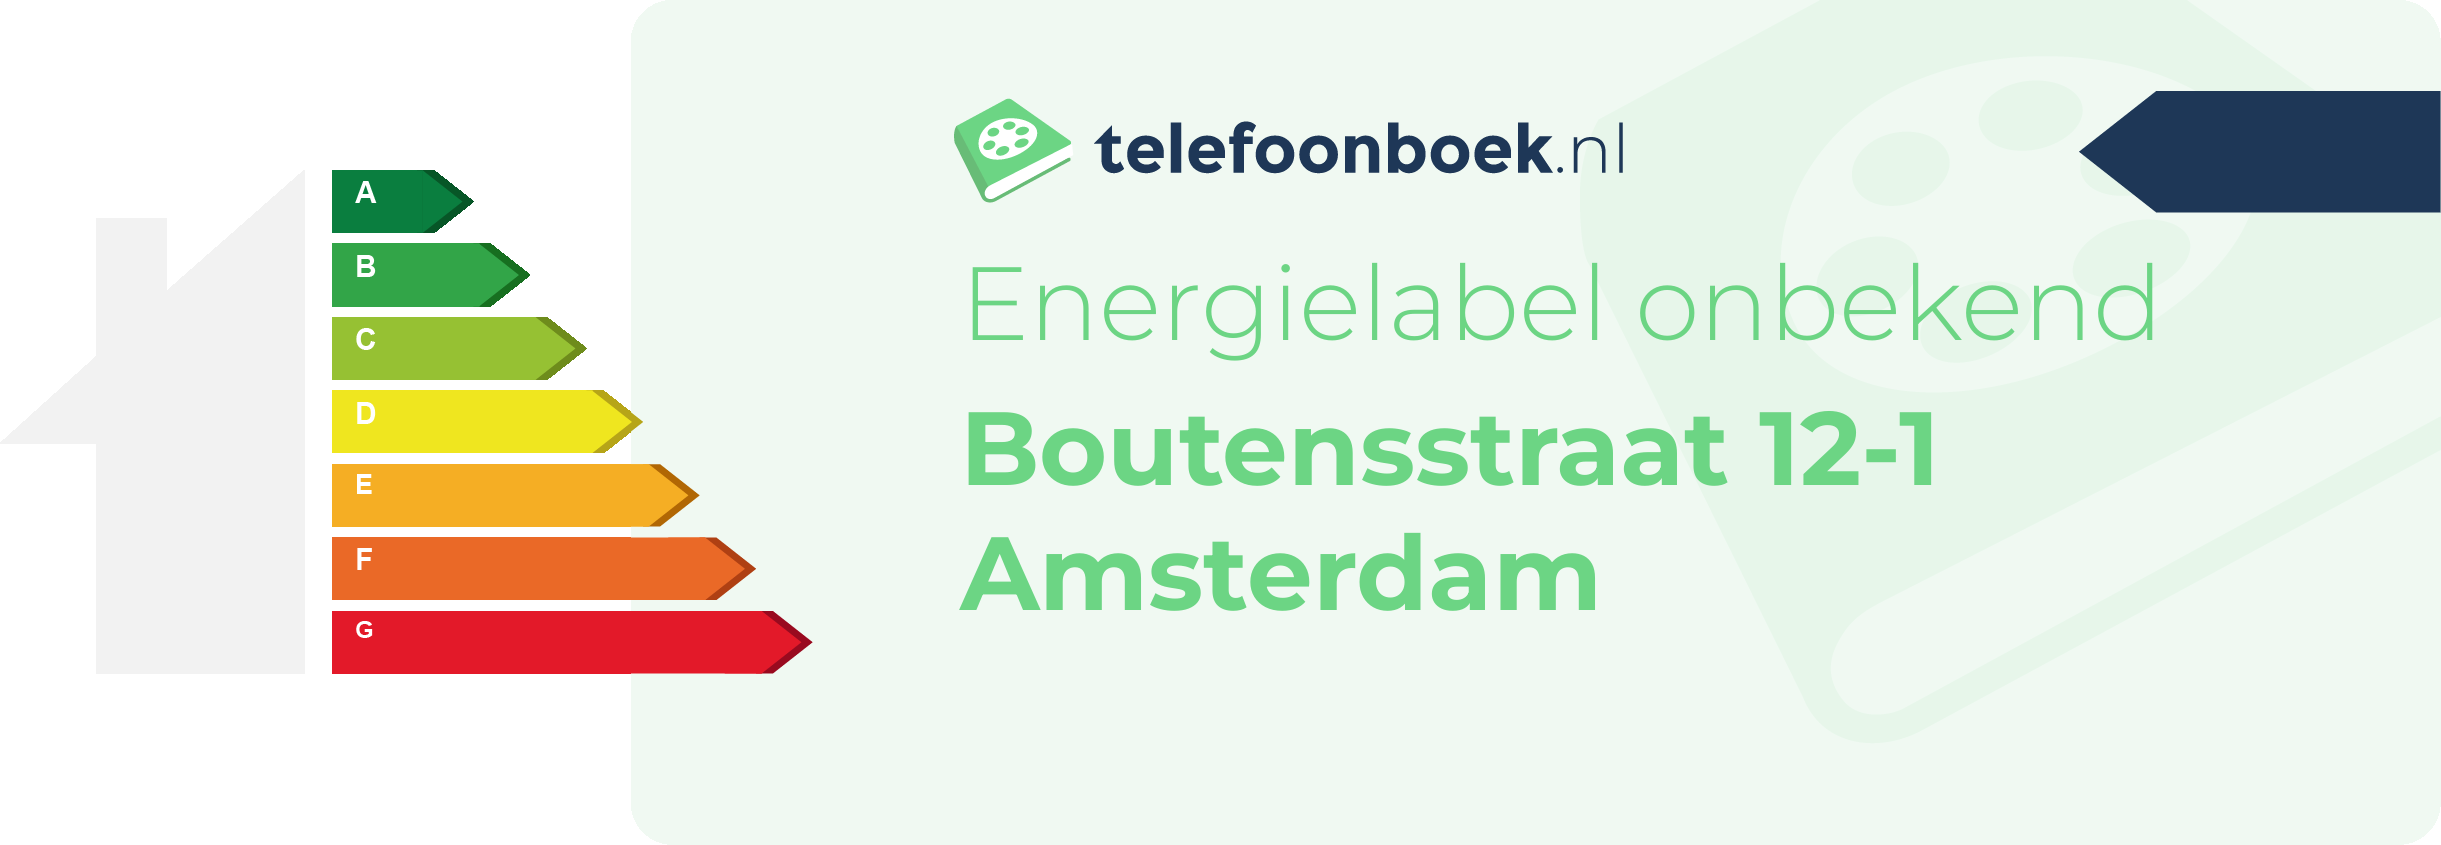 Energielabel Boutensstraat 12-1 Amsterdam